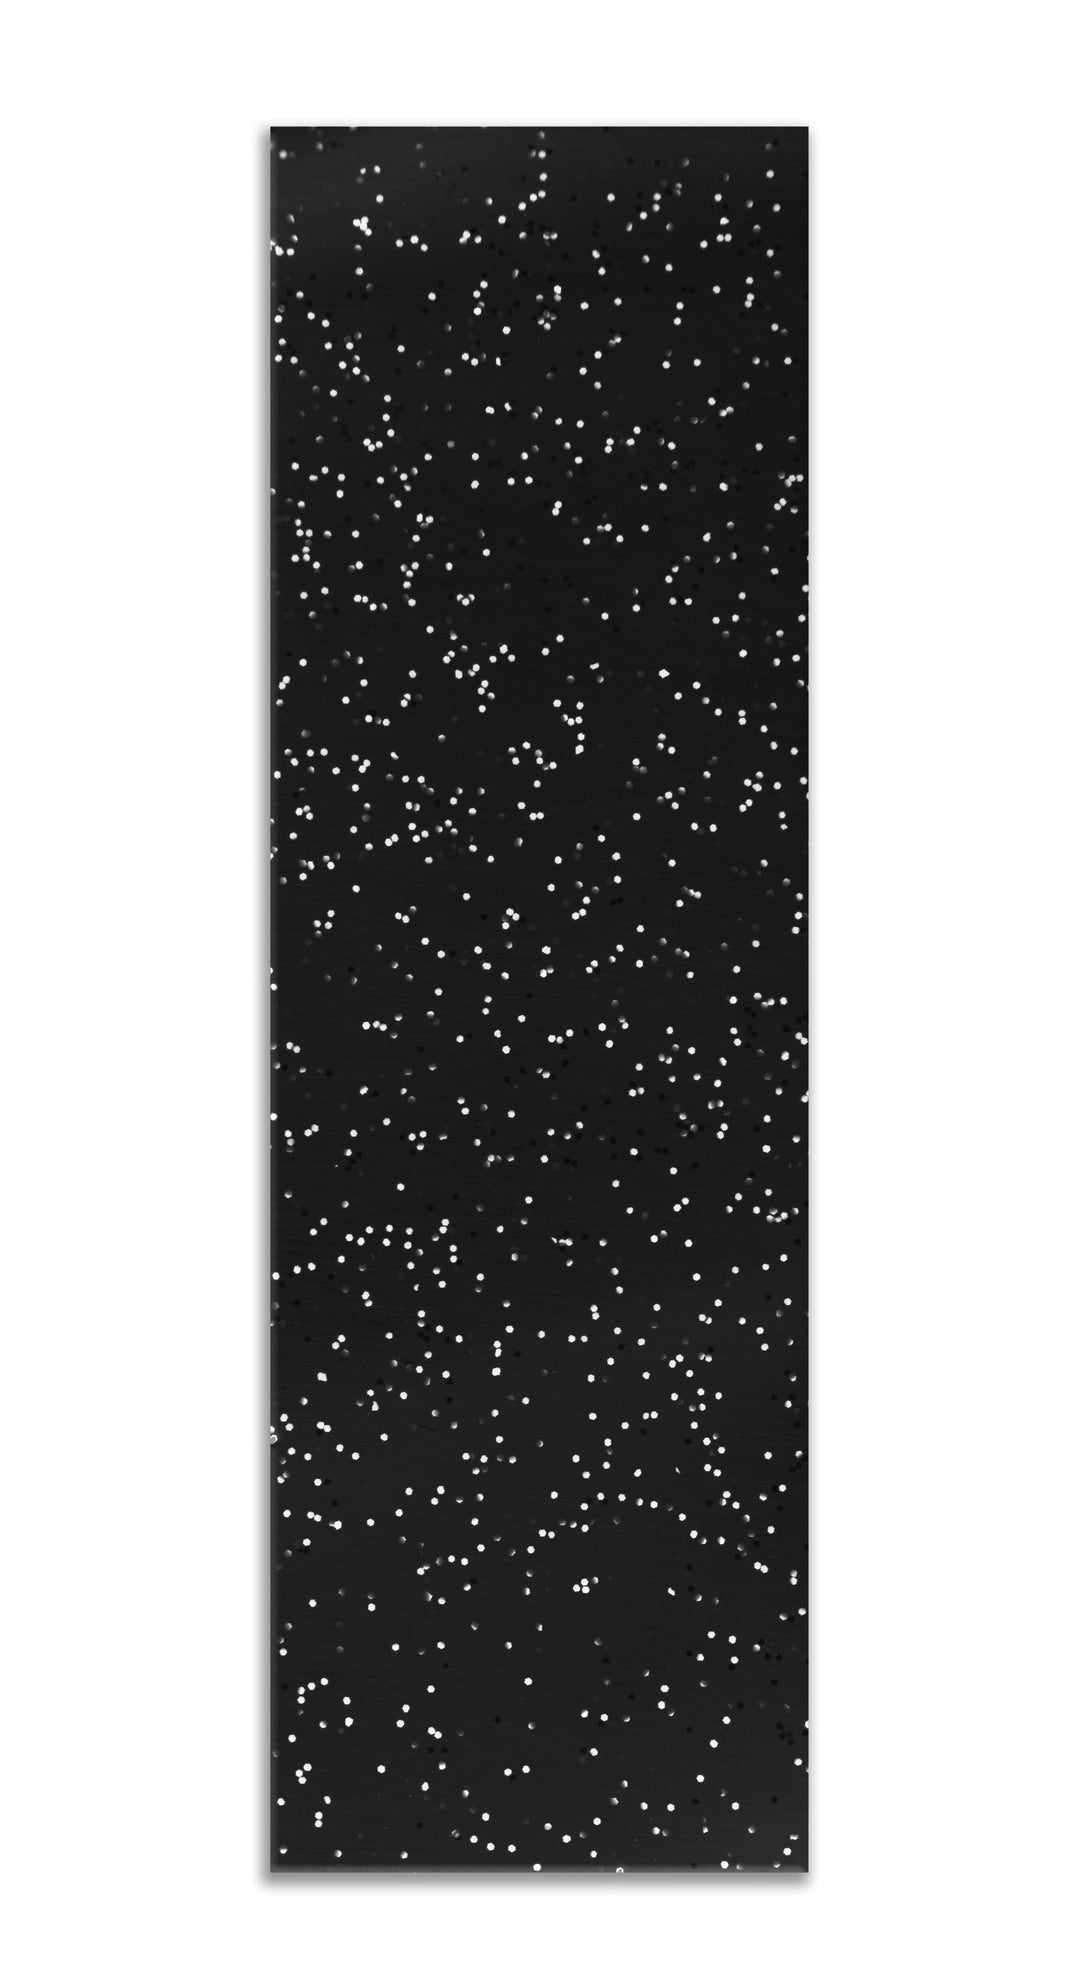 Teak Tuning Pro Duro Grip Tape, Black with White Glitter - 35mm x 110mm